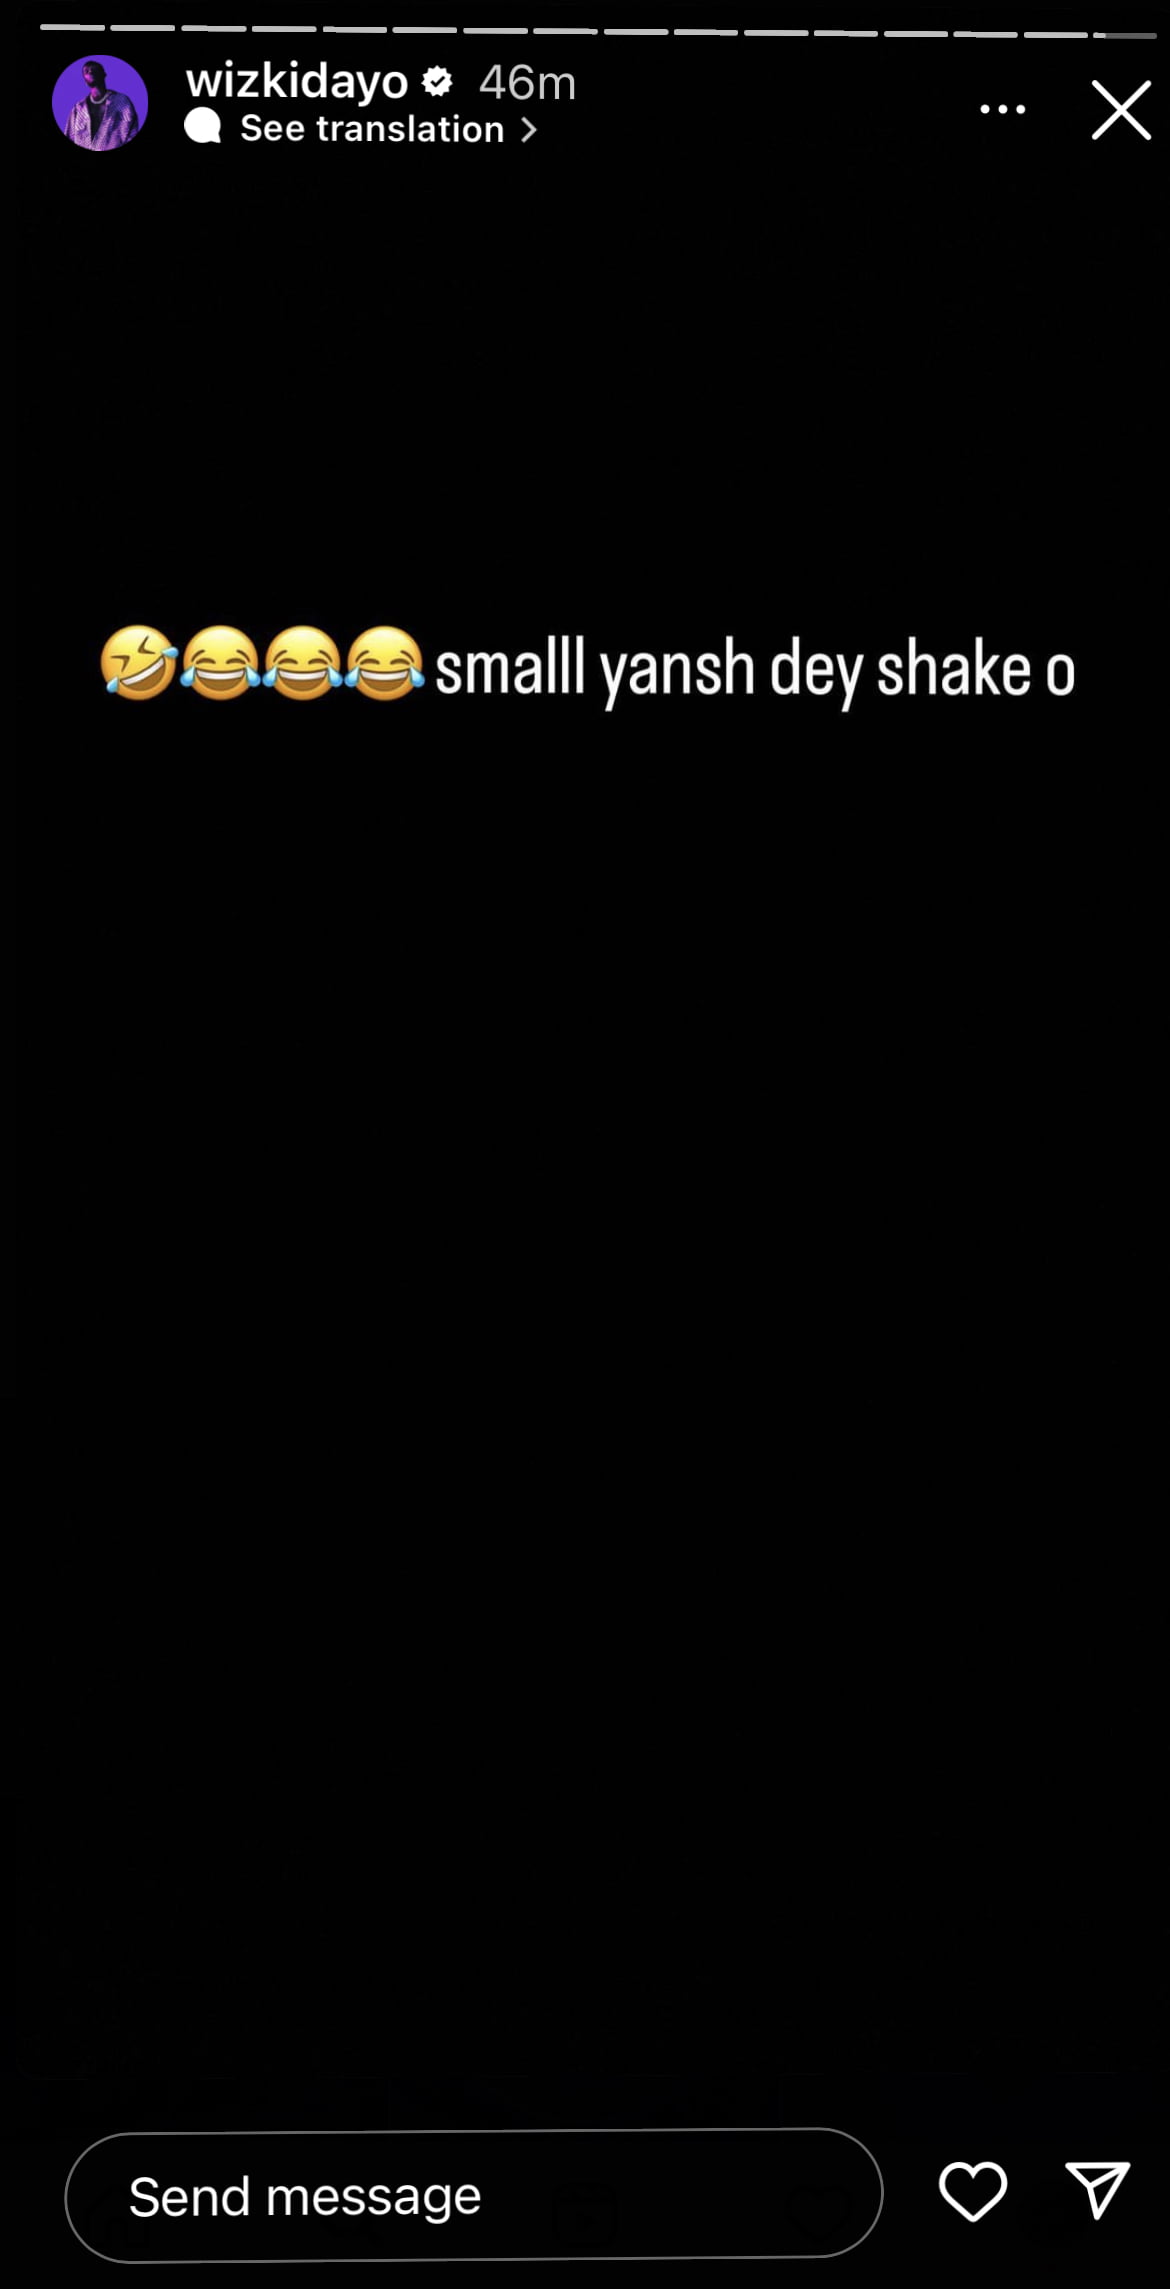 Small yansh dey shake o - Musician Wizkid carpets Burna Boy’s $100M claim [photos]